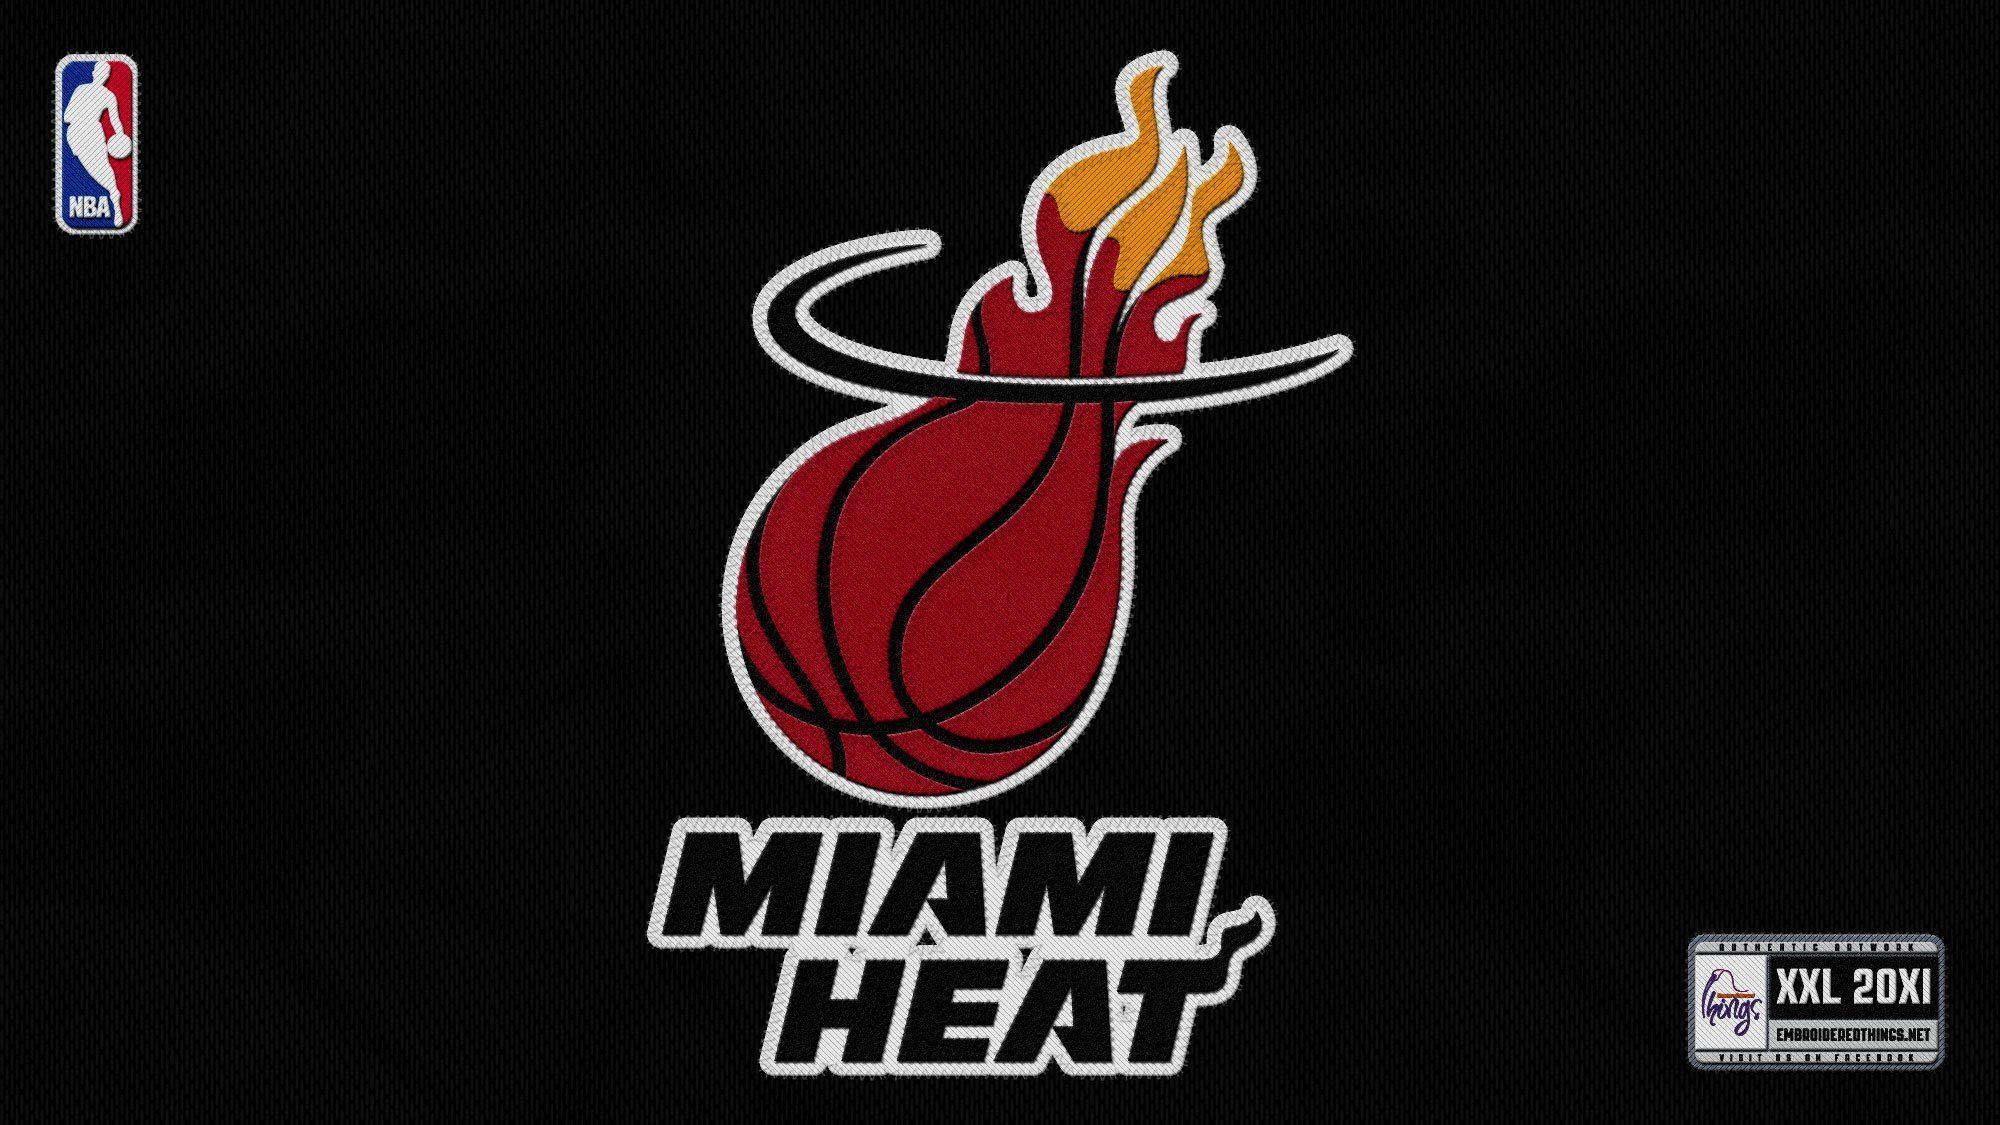 Miami Heat pictures.jpg